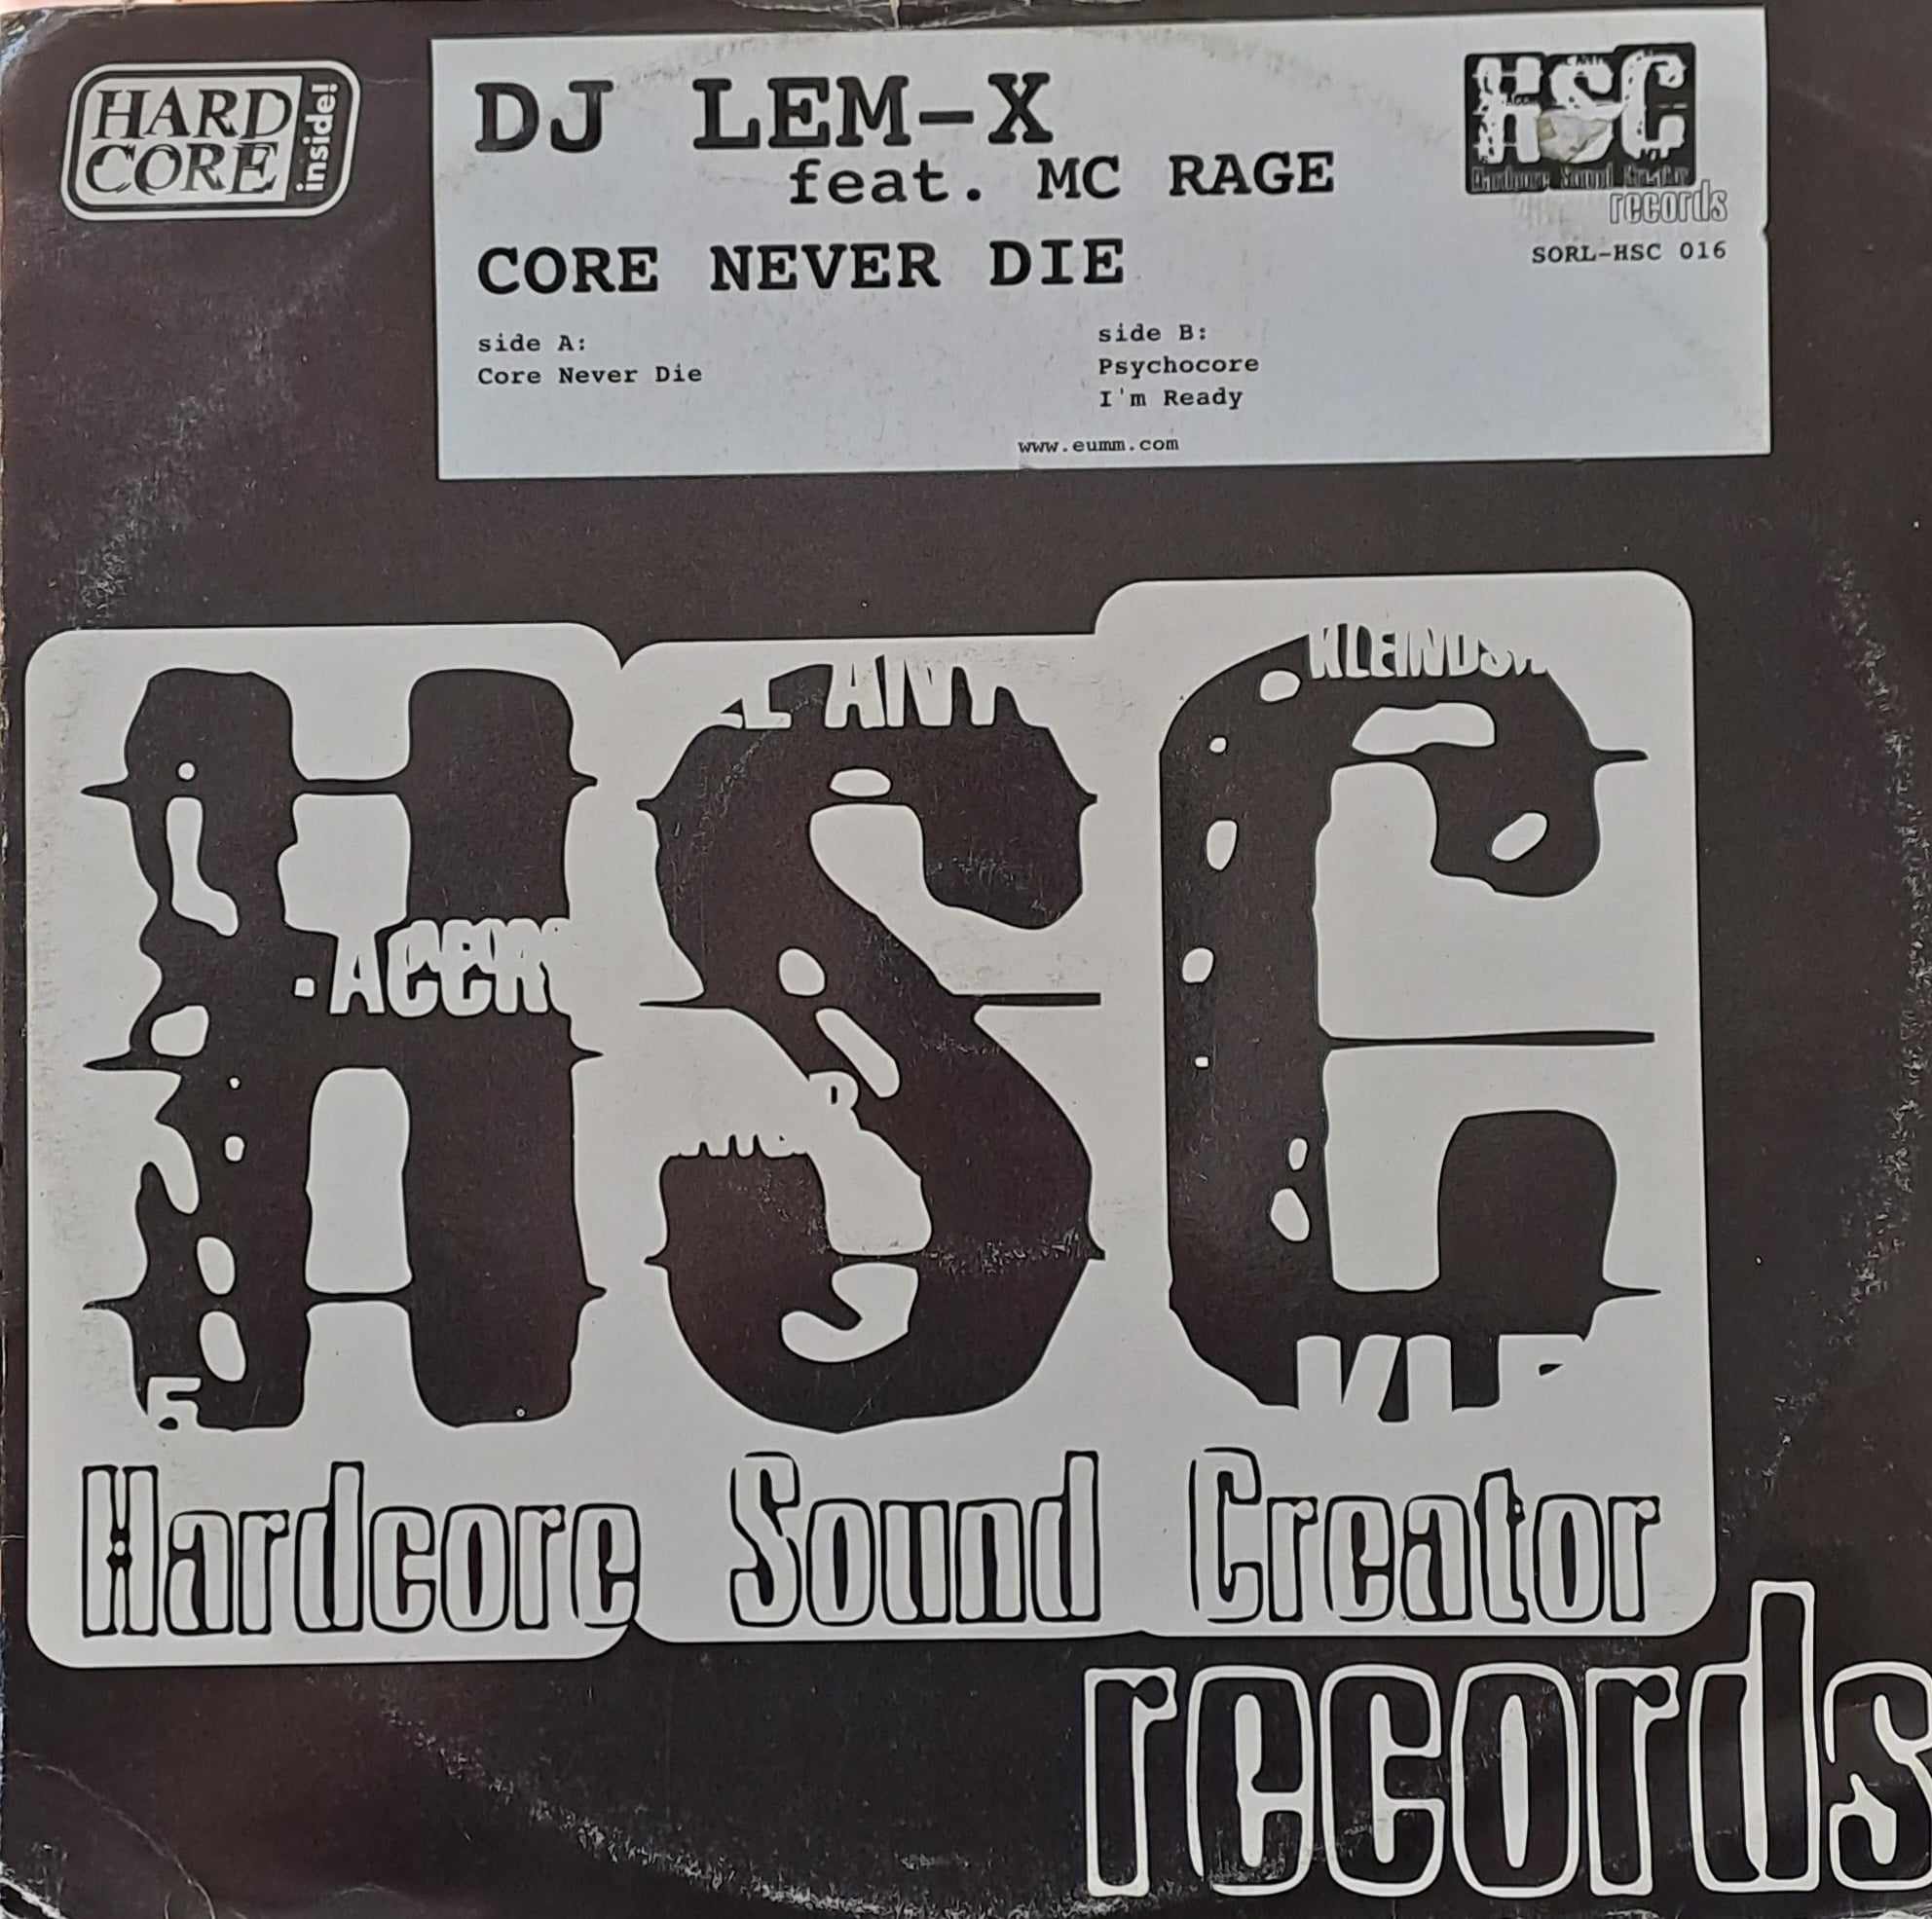 HSC Records 016 - vinyle gabber